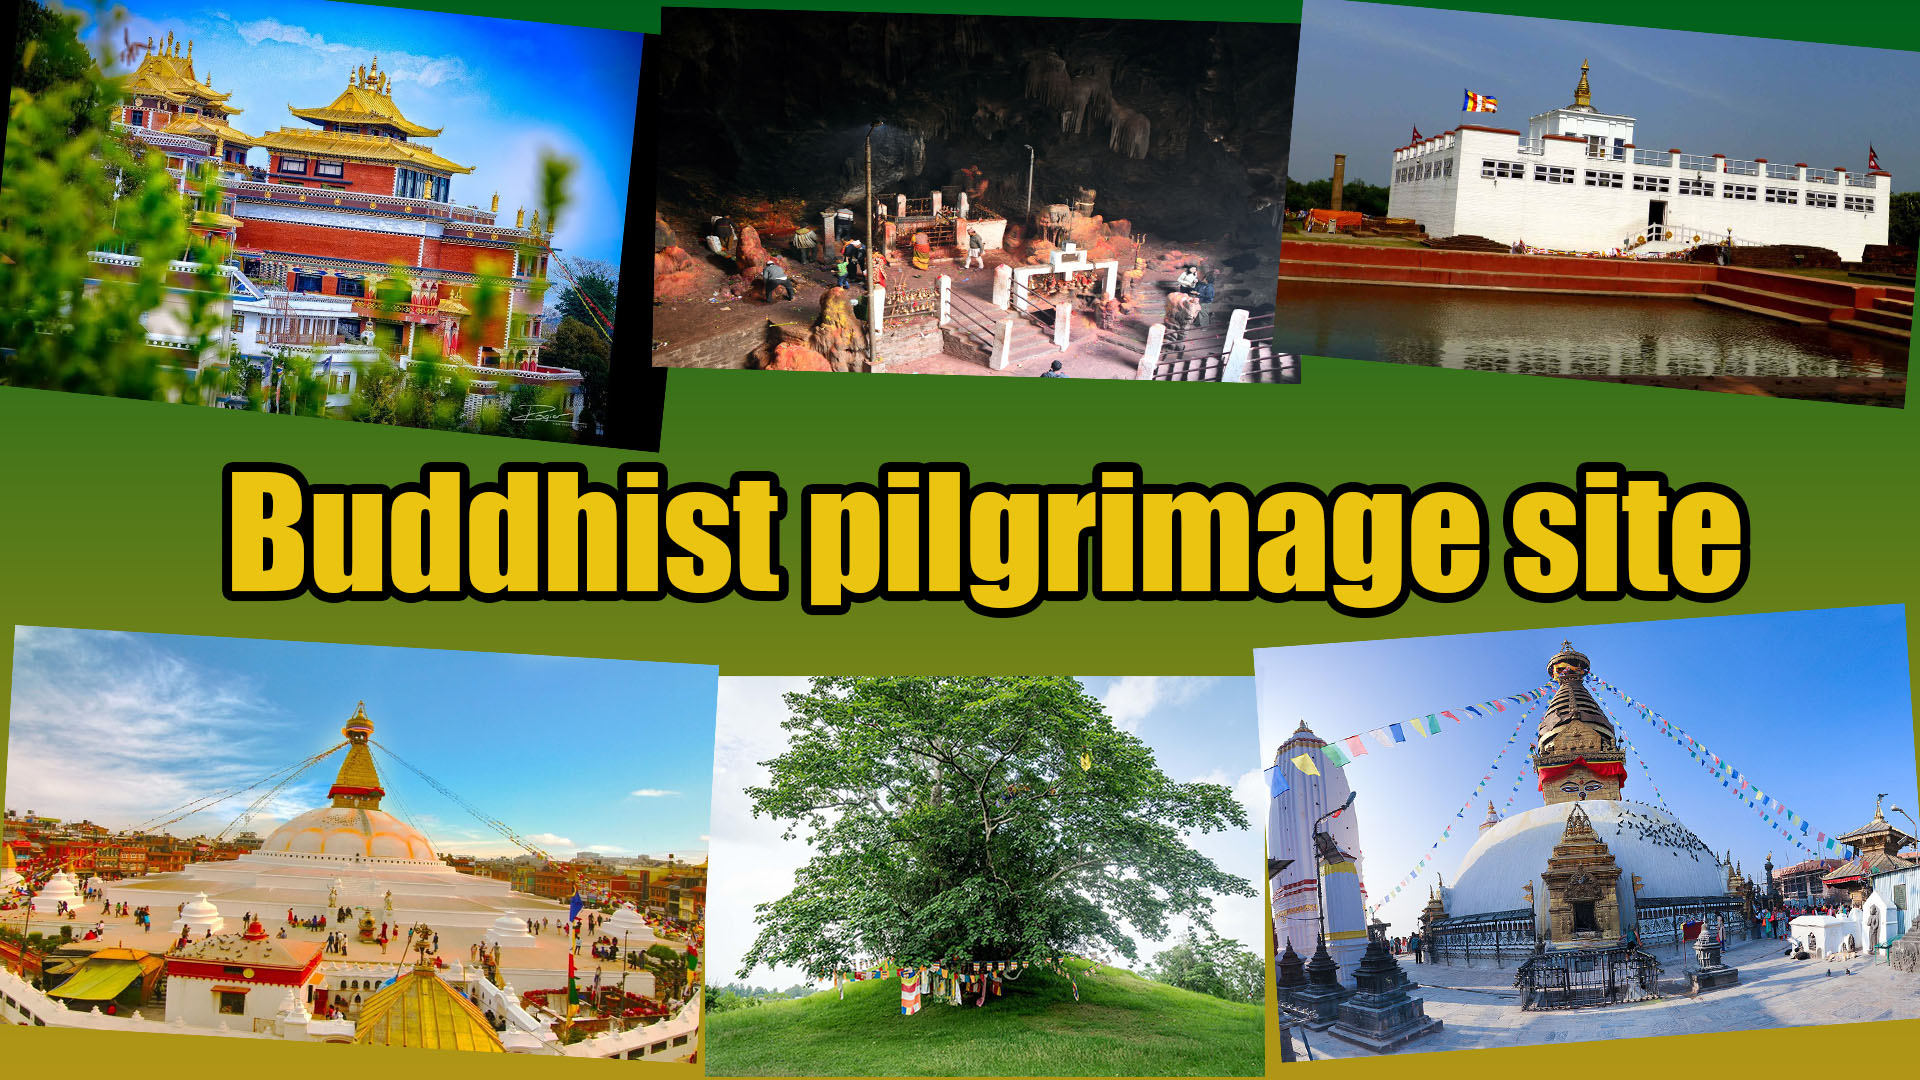 Buddhist pilgrimage sites in Nepal